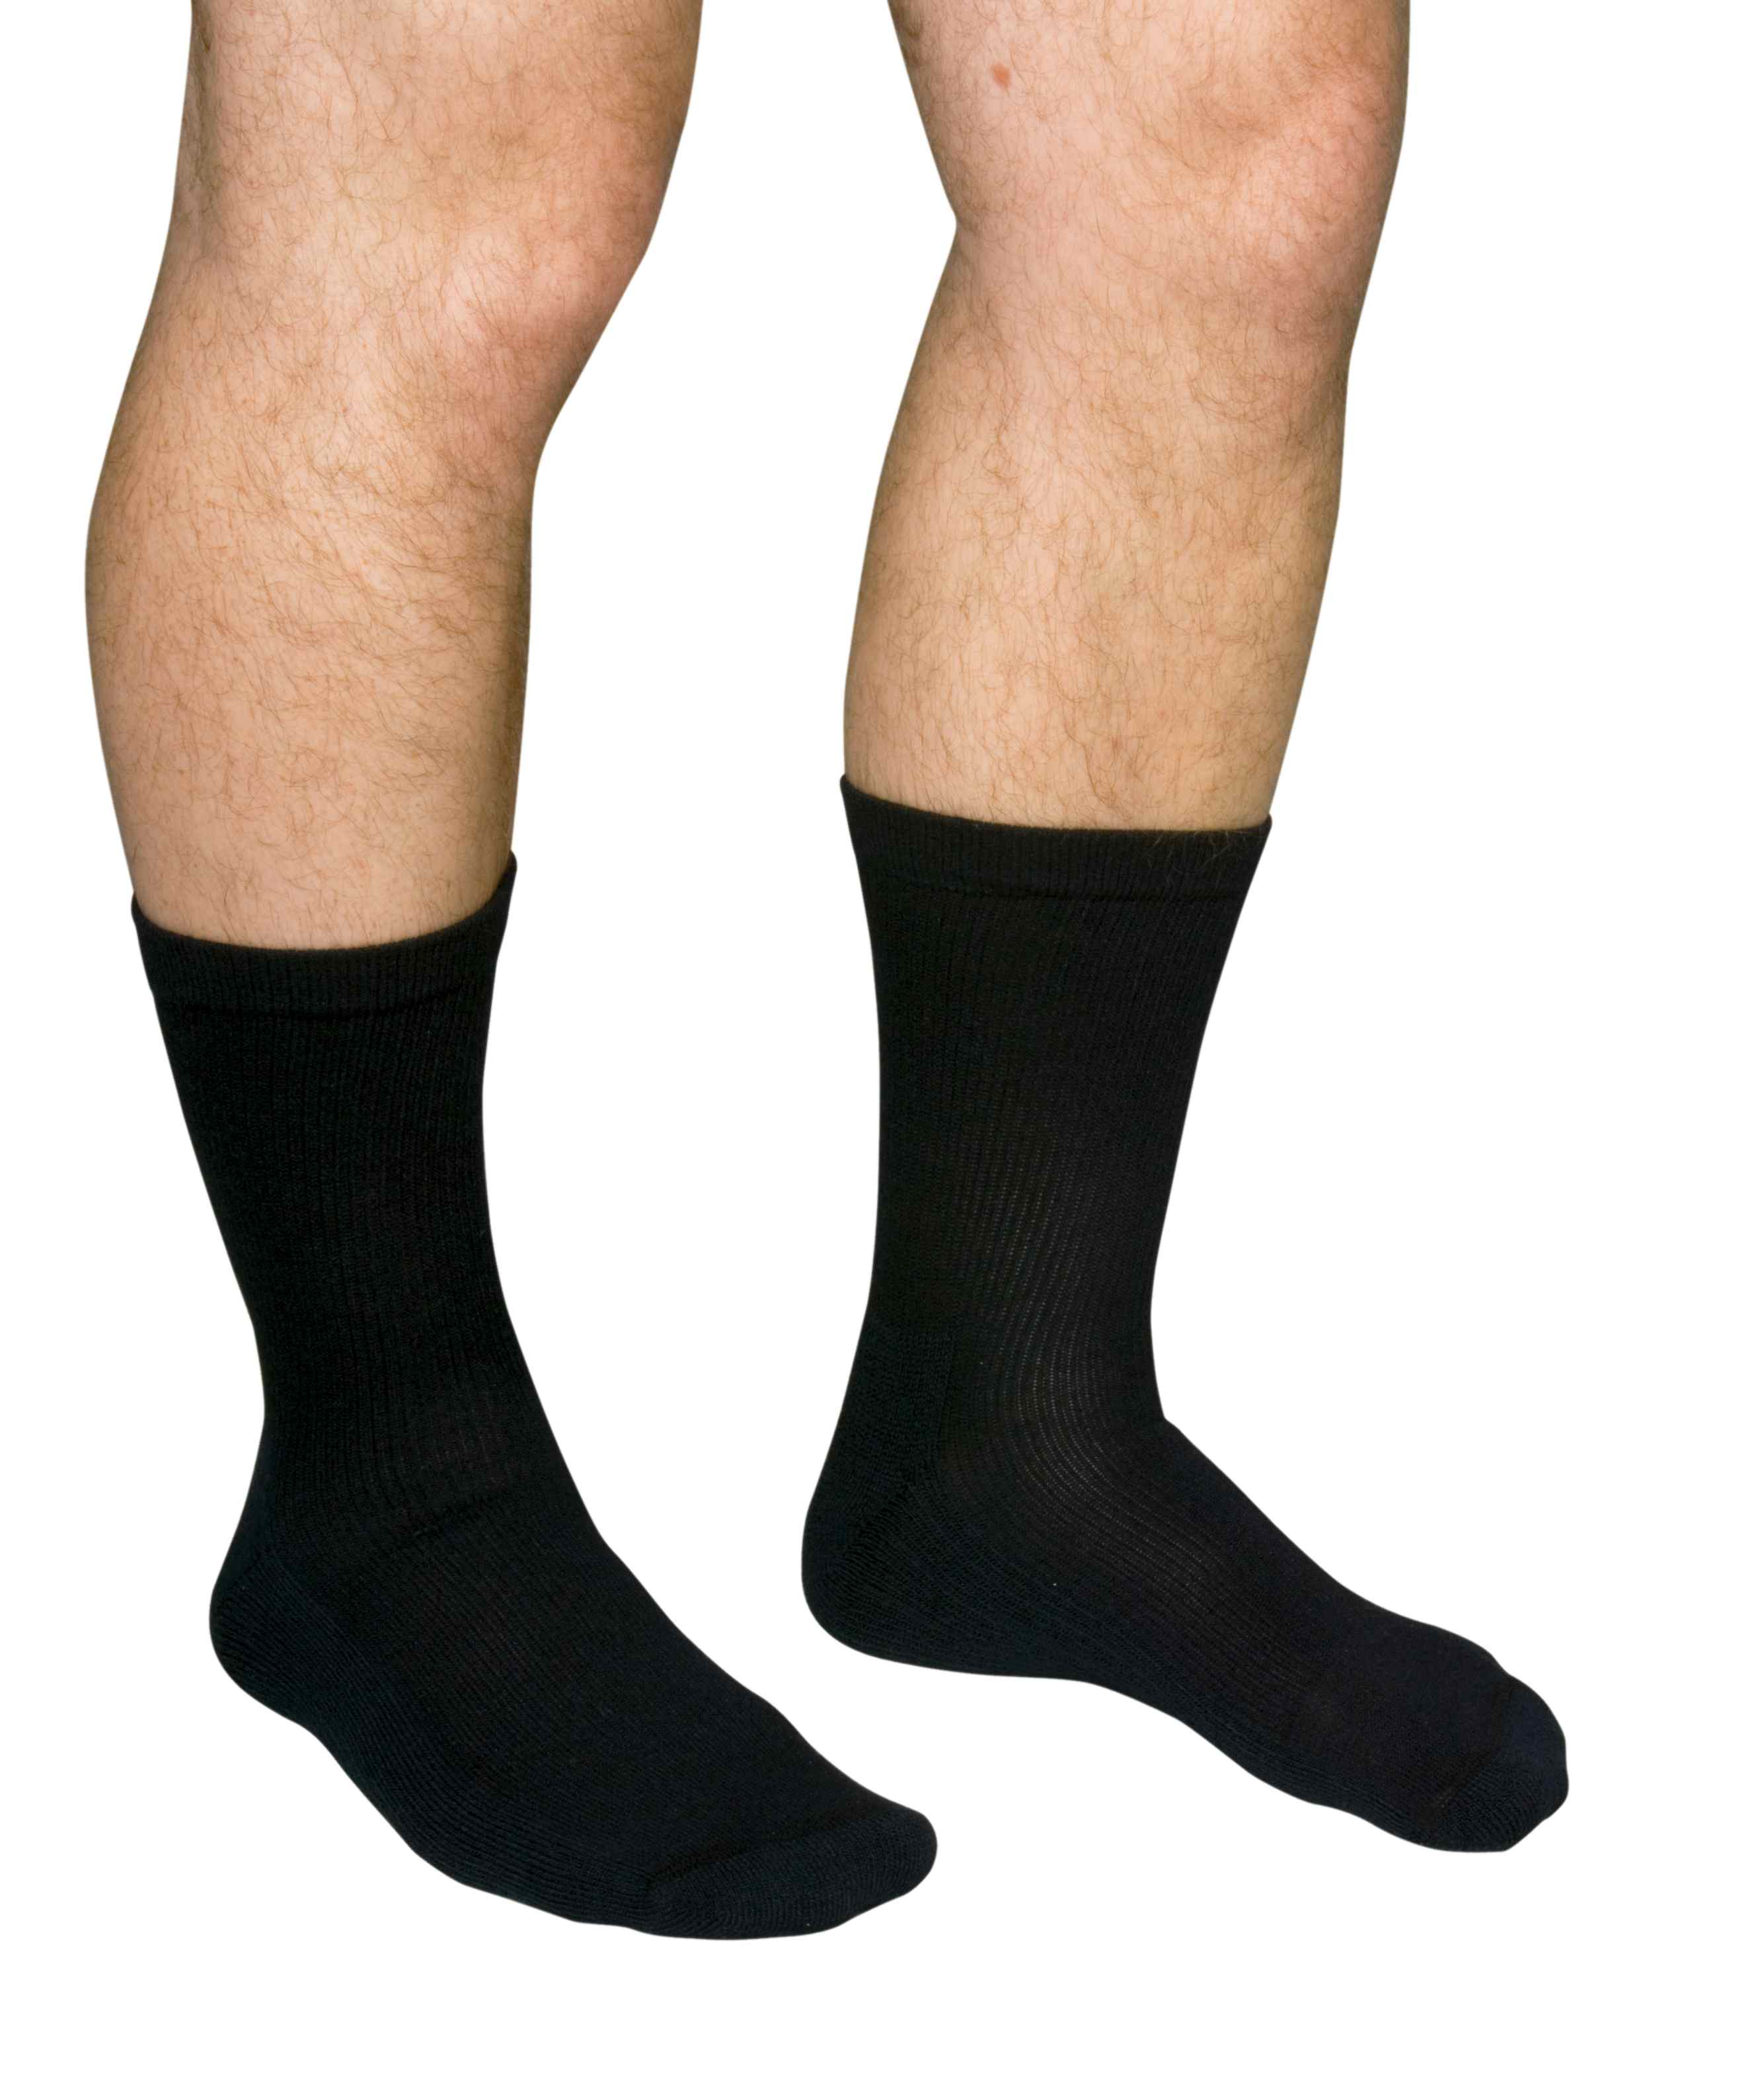 QCS Diabetic Care Crew Sock for Men and Women, White, MCO1680WHIMD, Medium